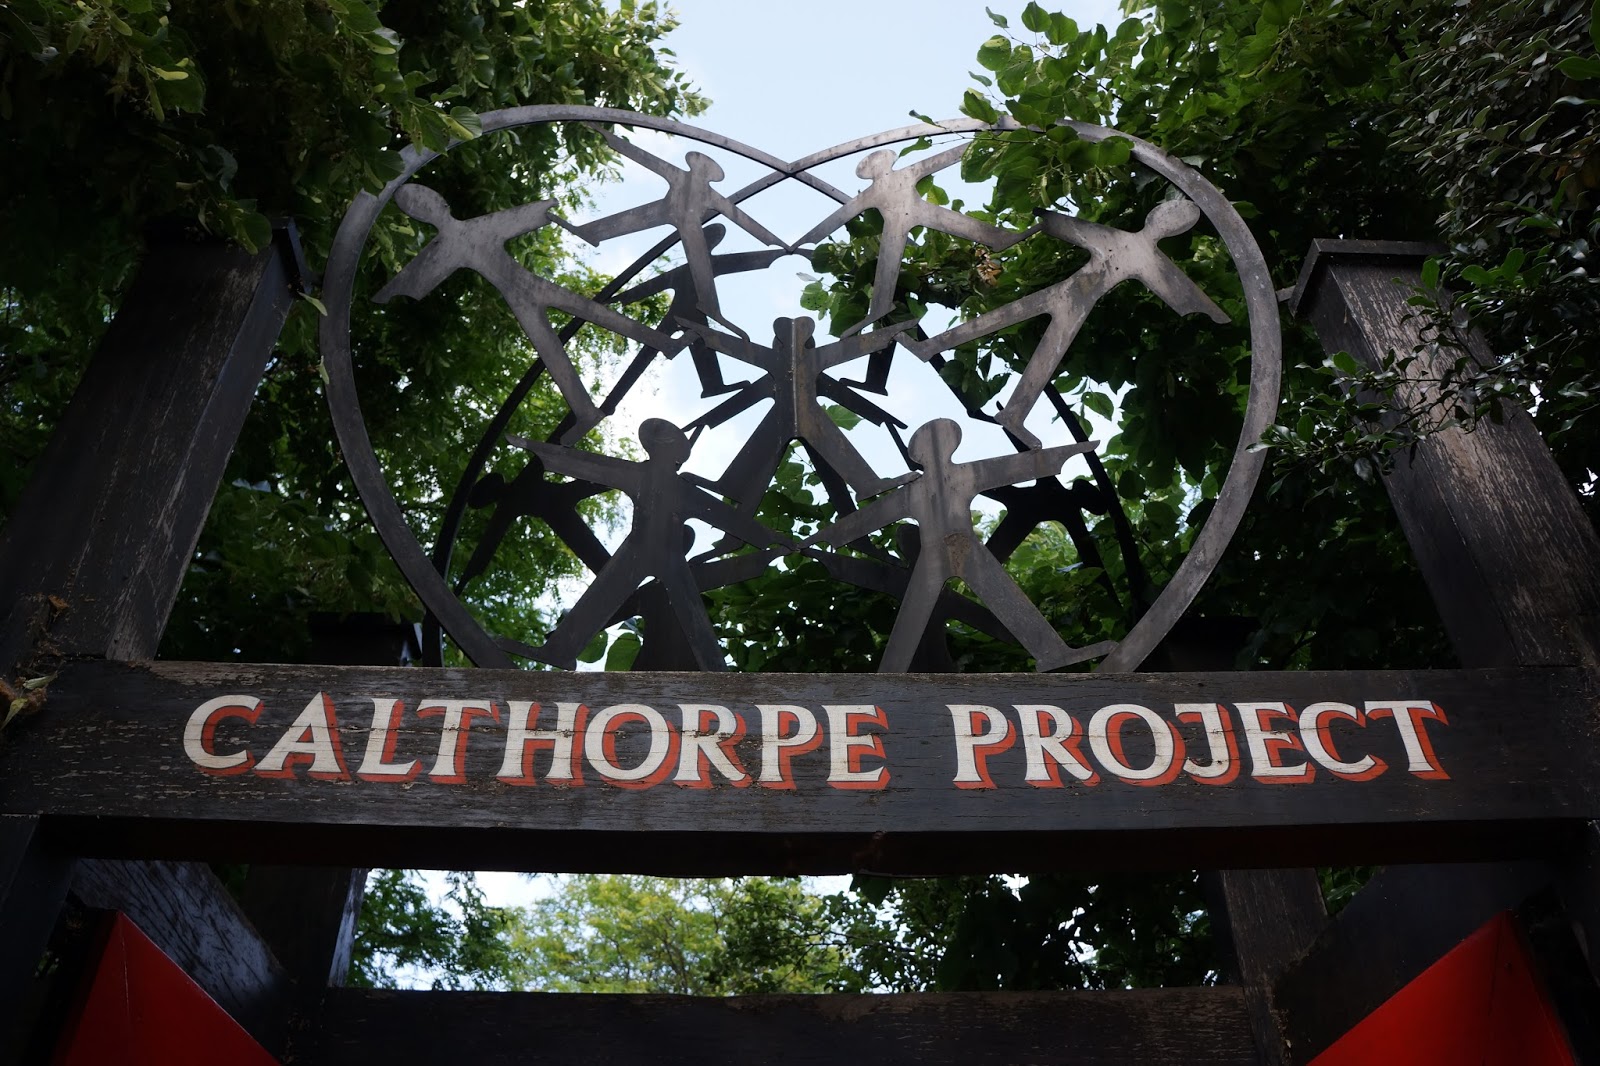 calthorpe project gates